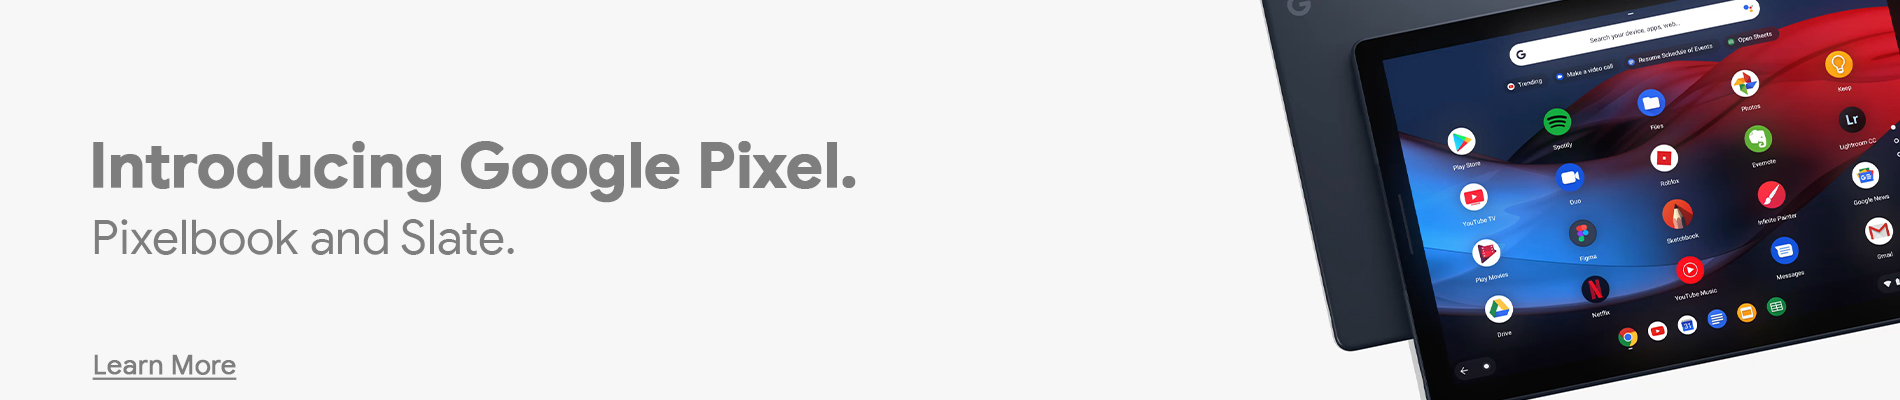 Google Main Store Page Tile2 Pixel Banner